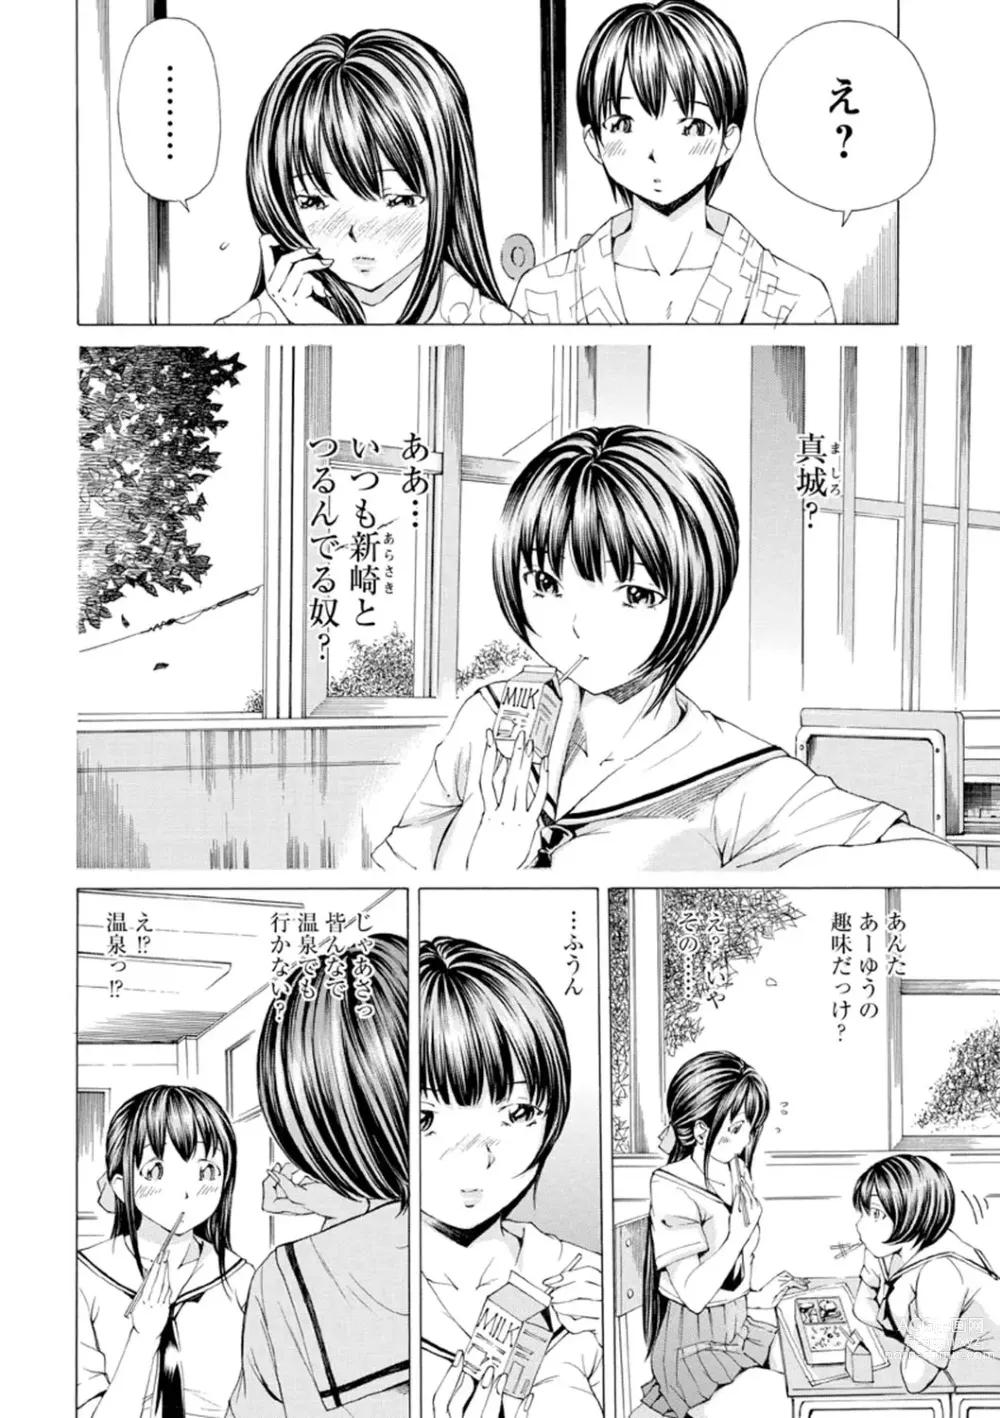 Page 155 of manga M-kko Sekkan Club - Masochistic JK Spanking CLUB!!!!